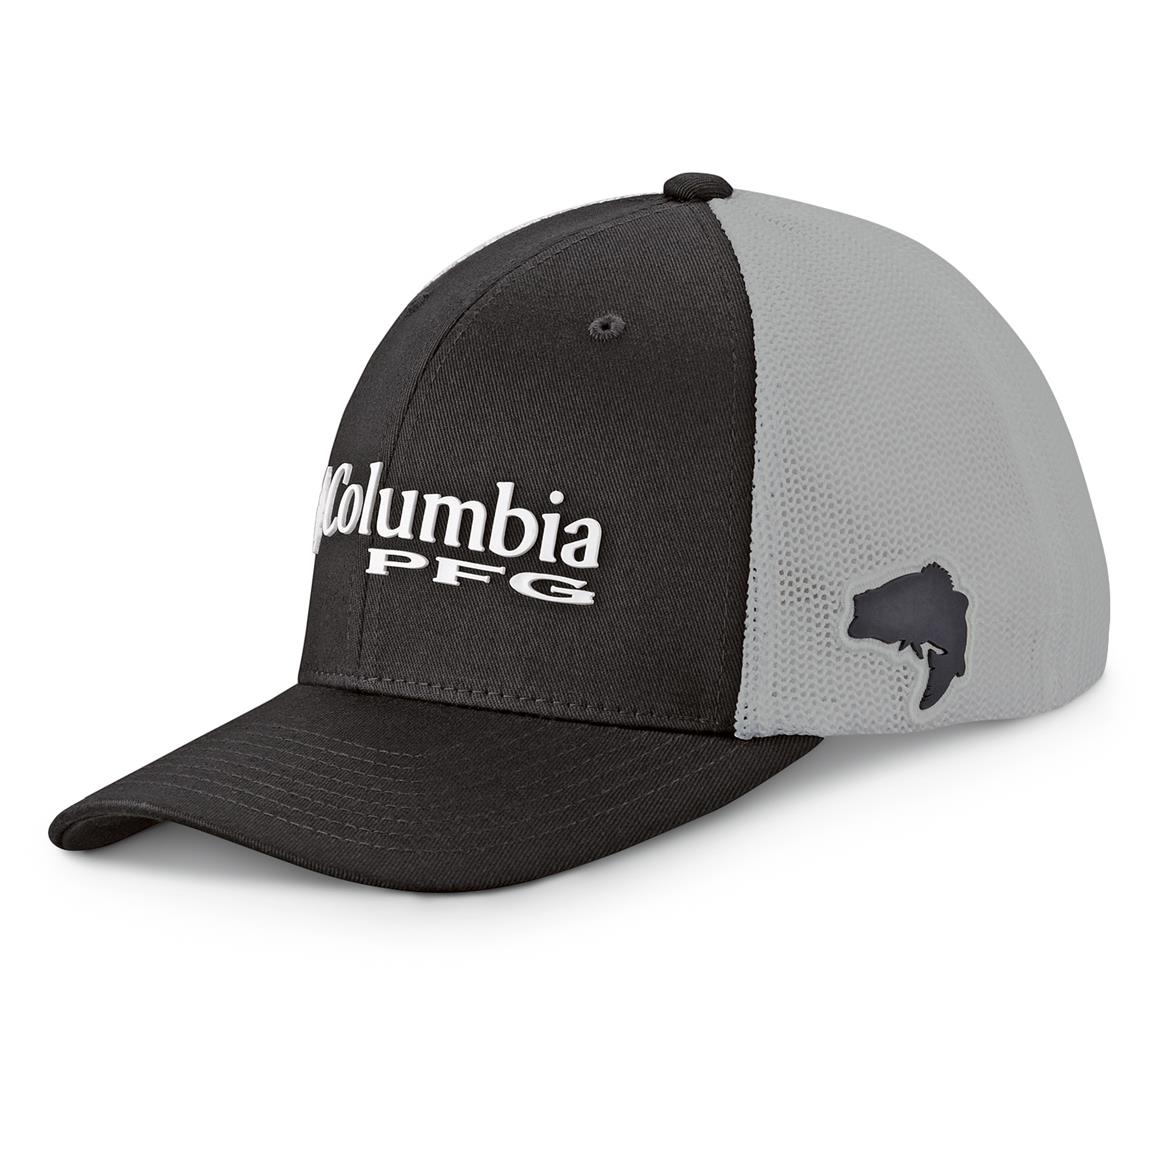 Columbia Pfg Hat Size Chart